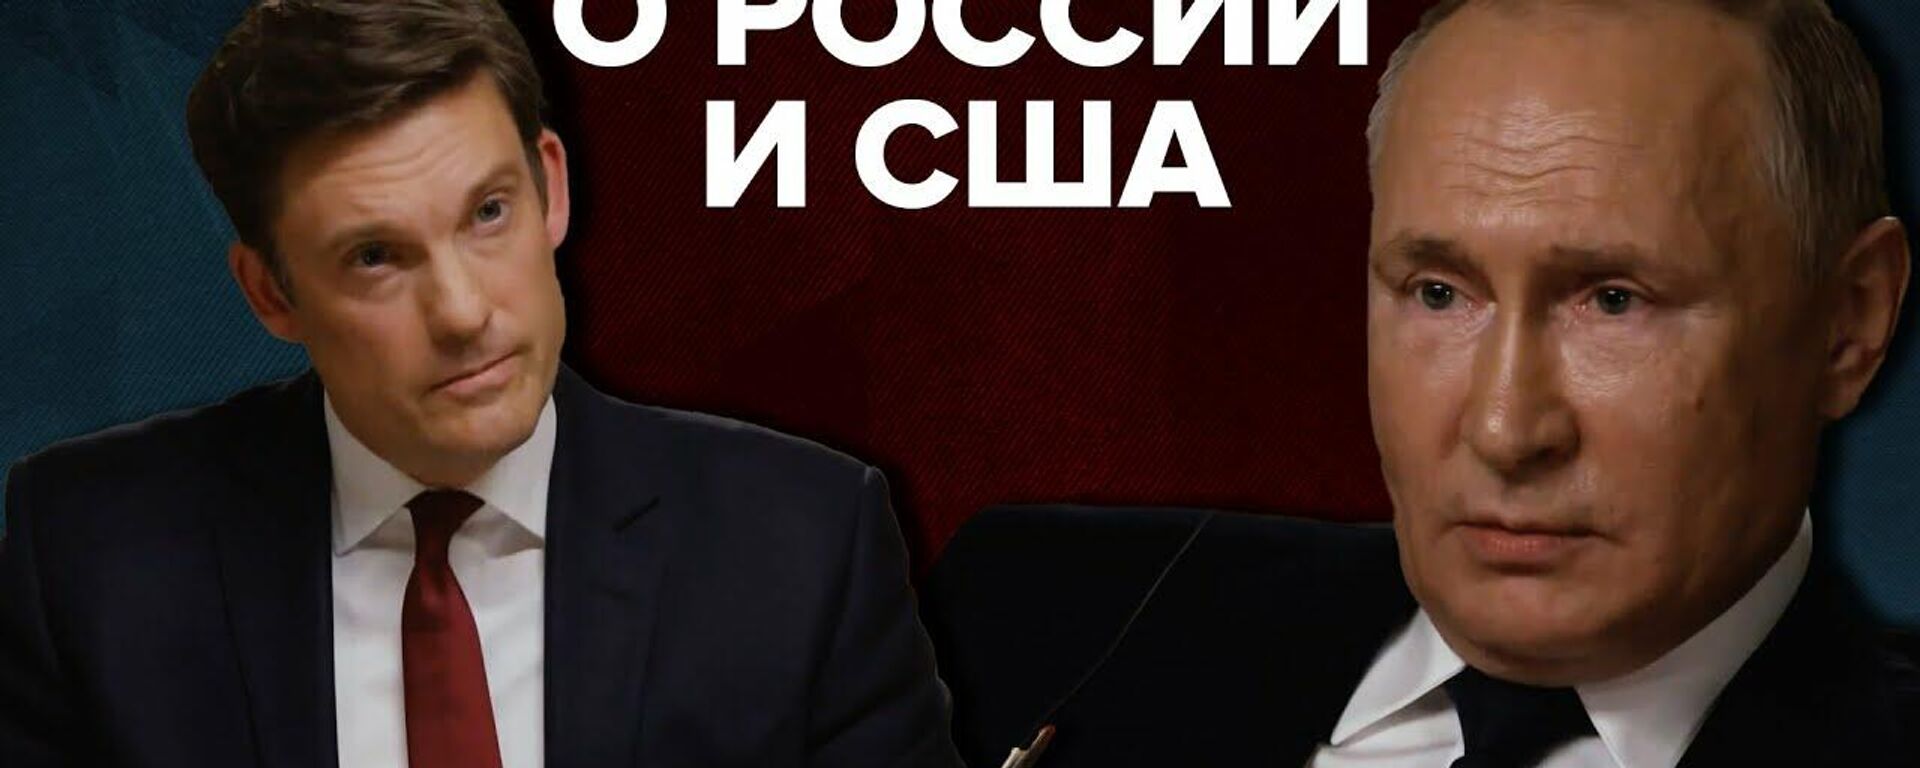 Фрагмент интервью президента России Владимира Путина журналисту телеканала NBC - Sputnik Latvija, 1920, 14.06.2021